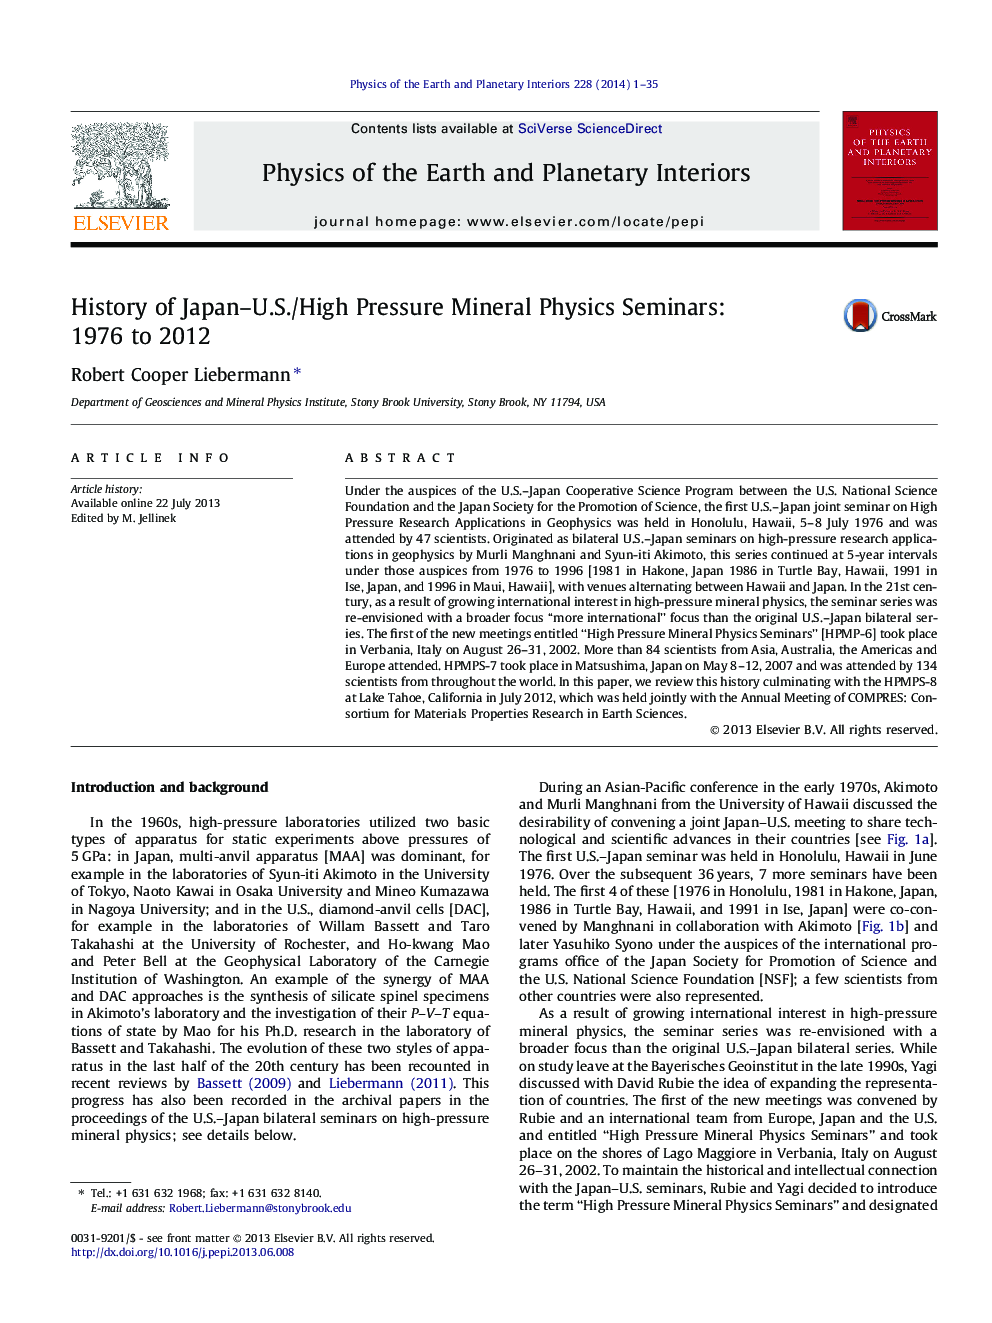 History of Japan–U.S./High Pressure Mineral Physics Seminars: 1976 to 2012